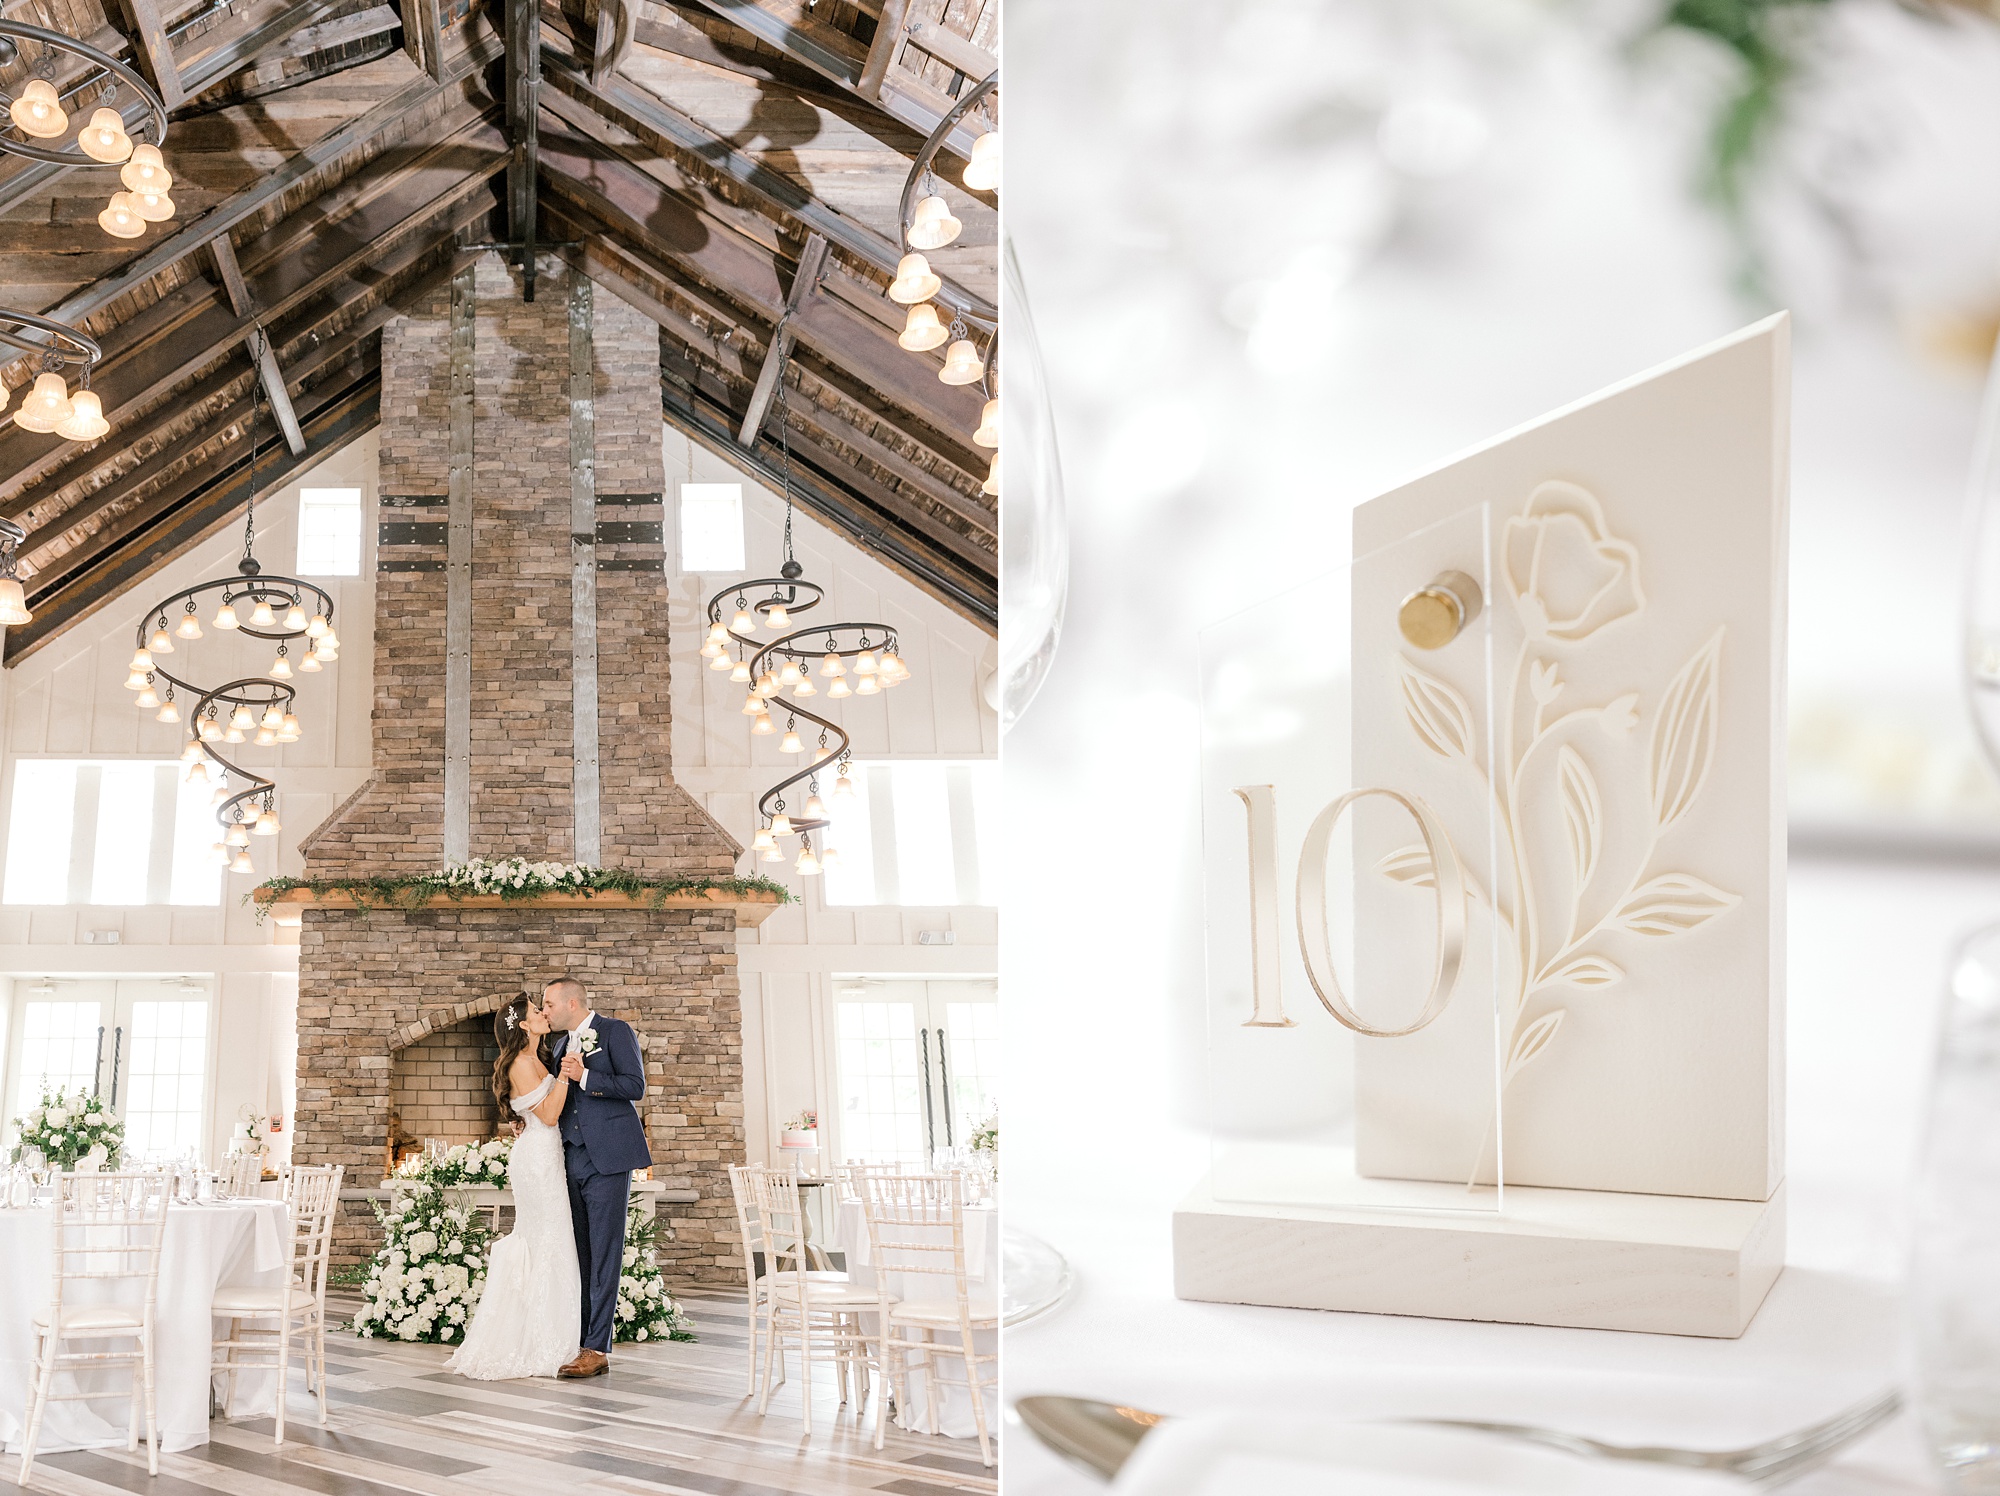 newlyweds hug by stone fireplace inside Ryland Inn during wedding reception